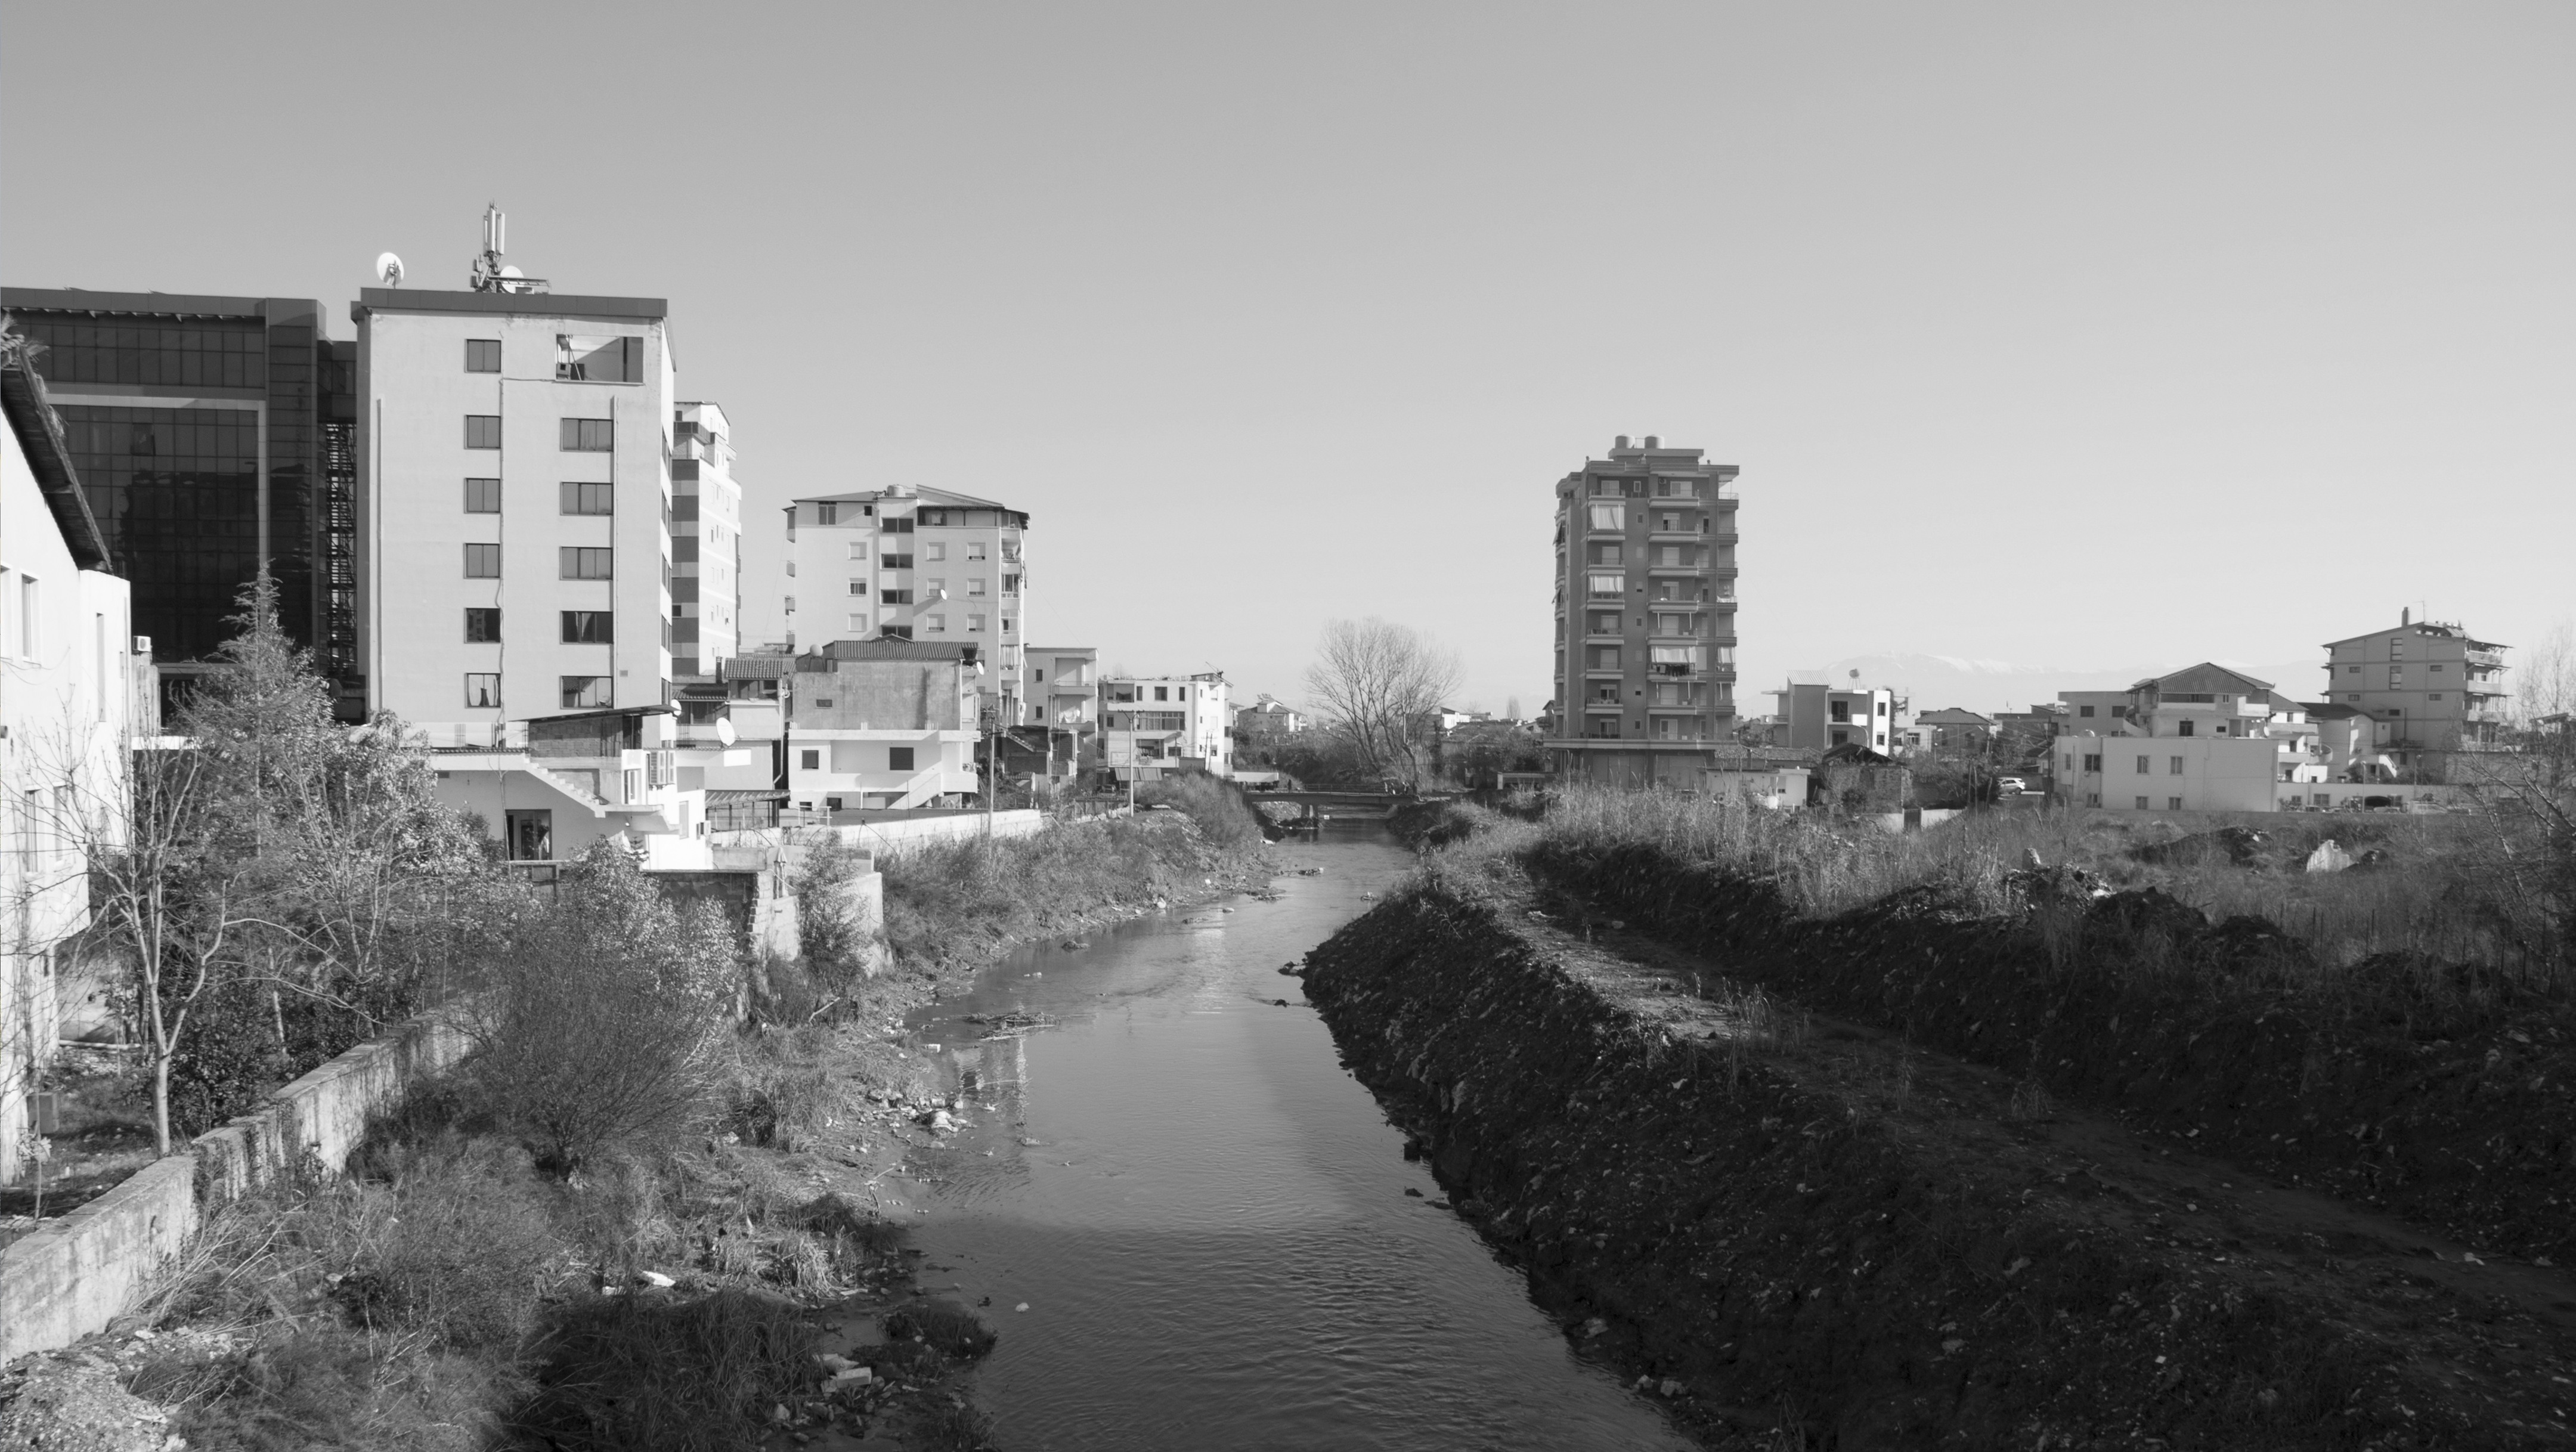 RI-GJANICA, Fier, Albania Urban and - MAU Architecture